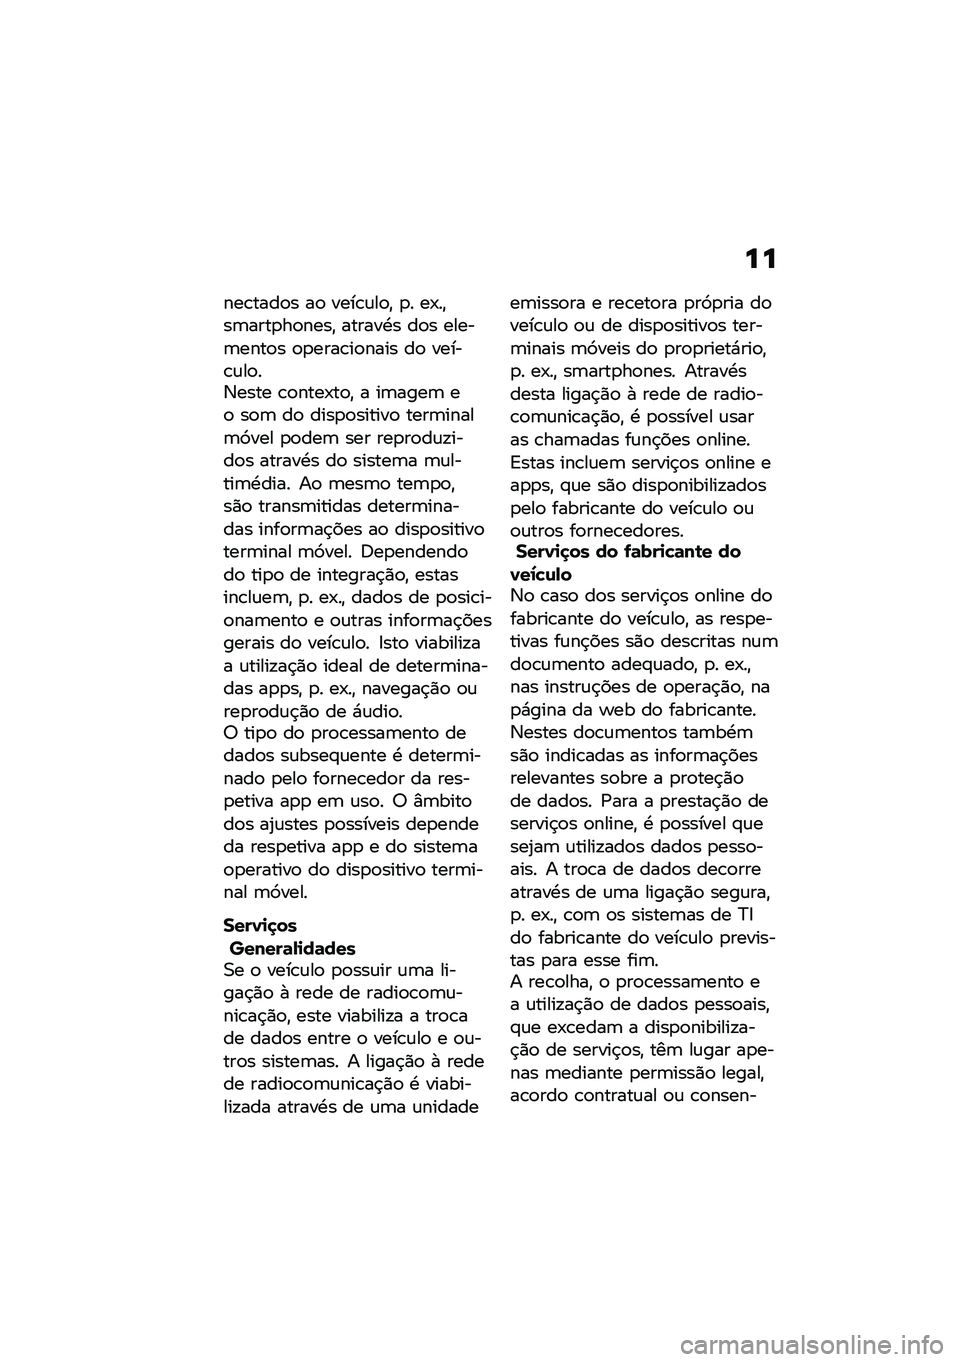 BMW MOTORRAD C 400 GT 2020  Manual do condutor (in Portuguese) ��
���\b����
� ��
 ����\b�\f��
�" �
� ��-��"��	����
��
����" ������.� ��
� �����	����
� �
�
����\b��
���� ��
 �����\b�\f��
��3���� �\b�
���